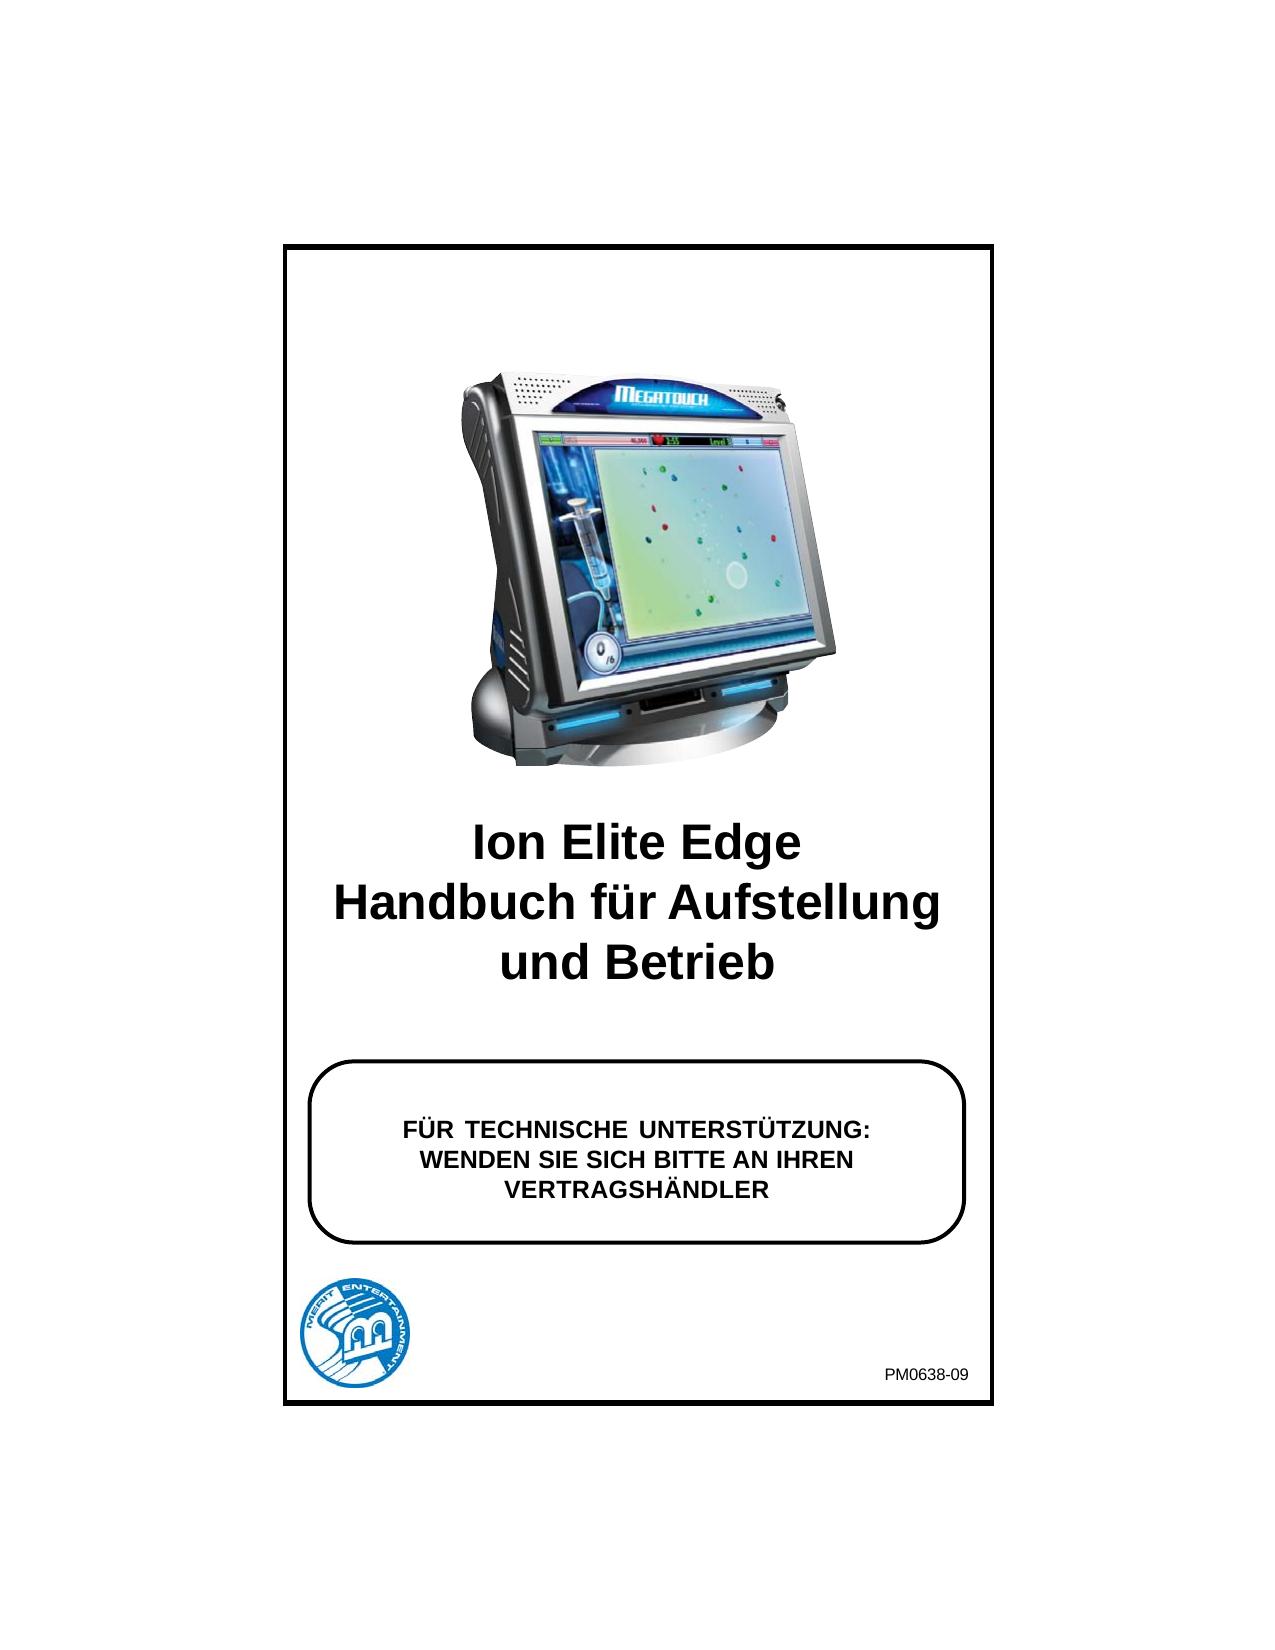 PM0638-09 German Elite Edge Ion 2K9 NO JOYSTICK_unreleased.pmd